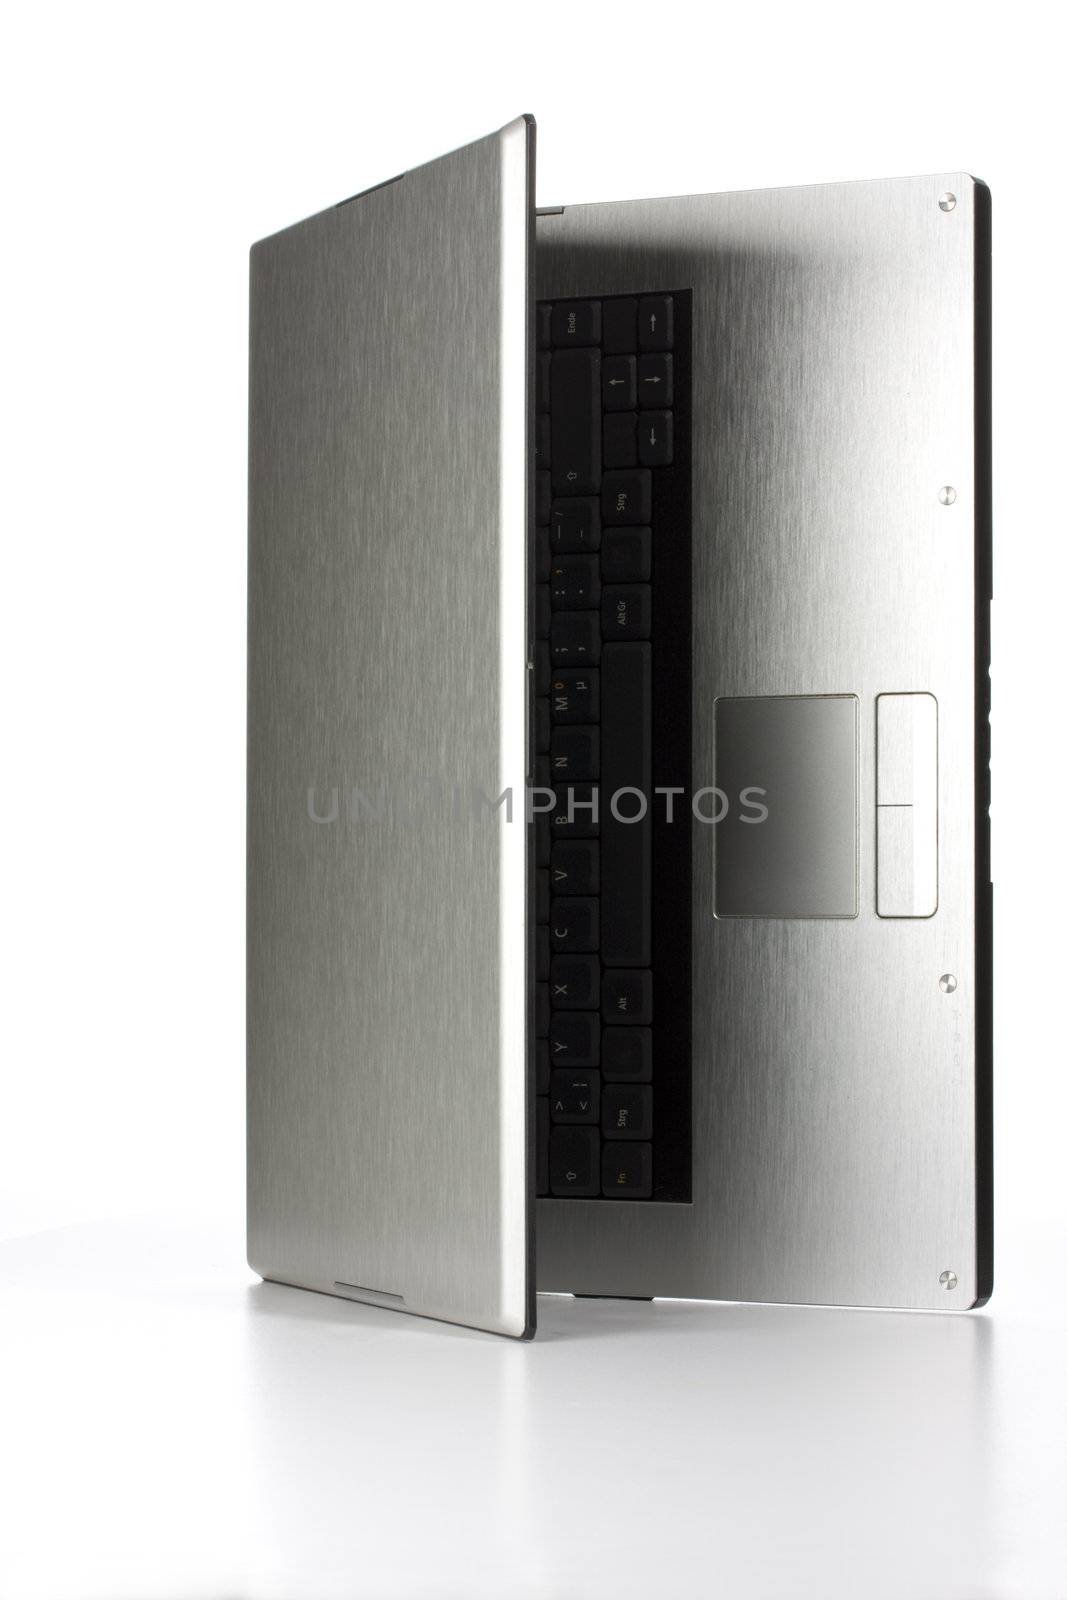 aluminium notebook computer on white background by bernjuer